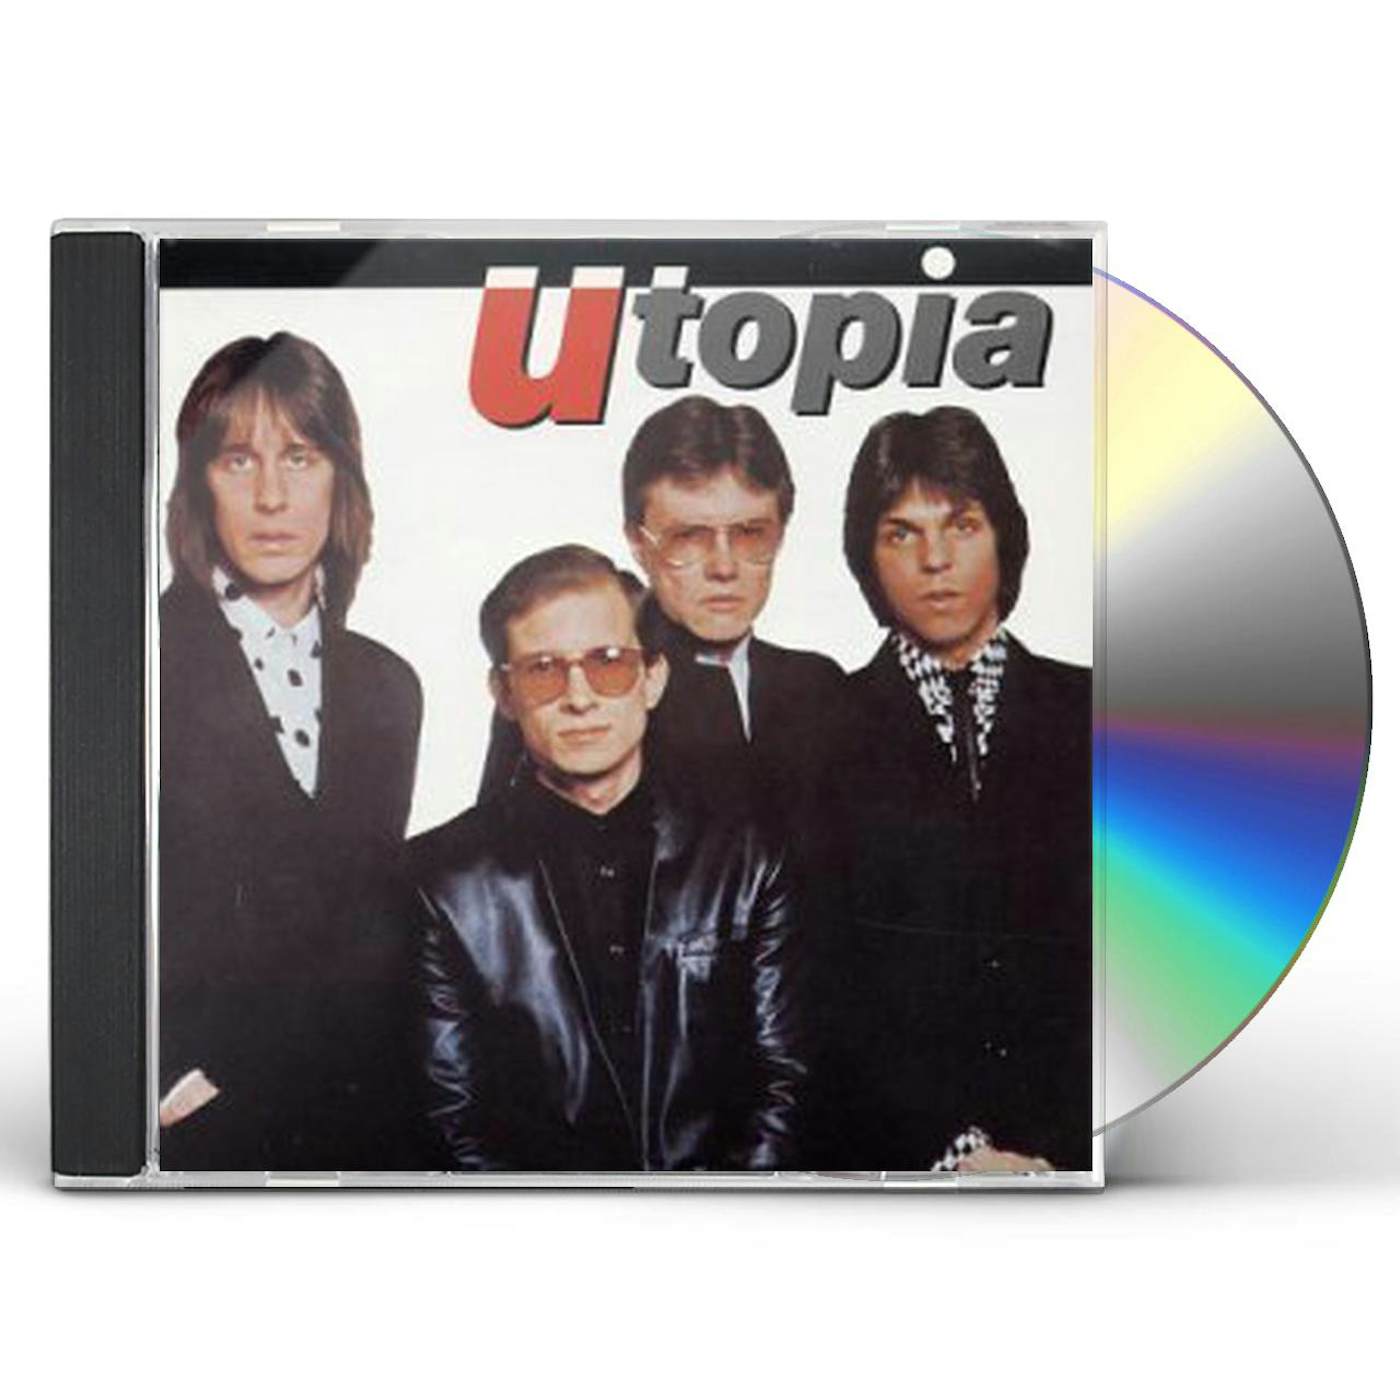 UTOPIA CD COVER 1